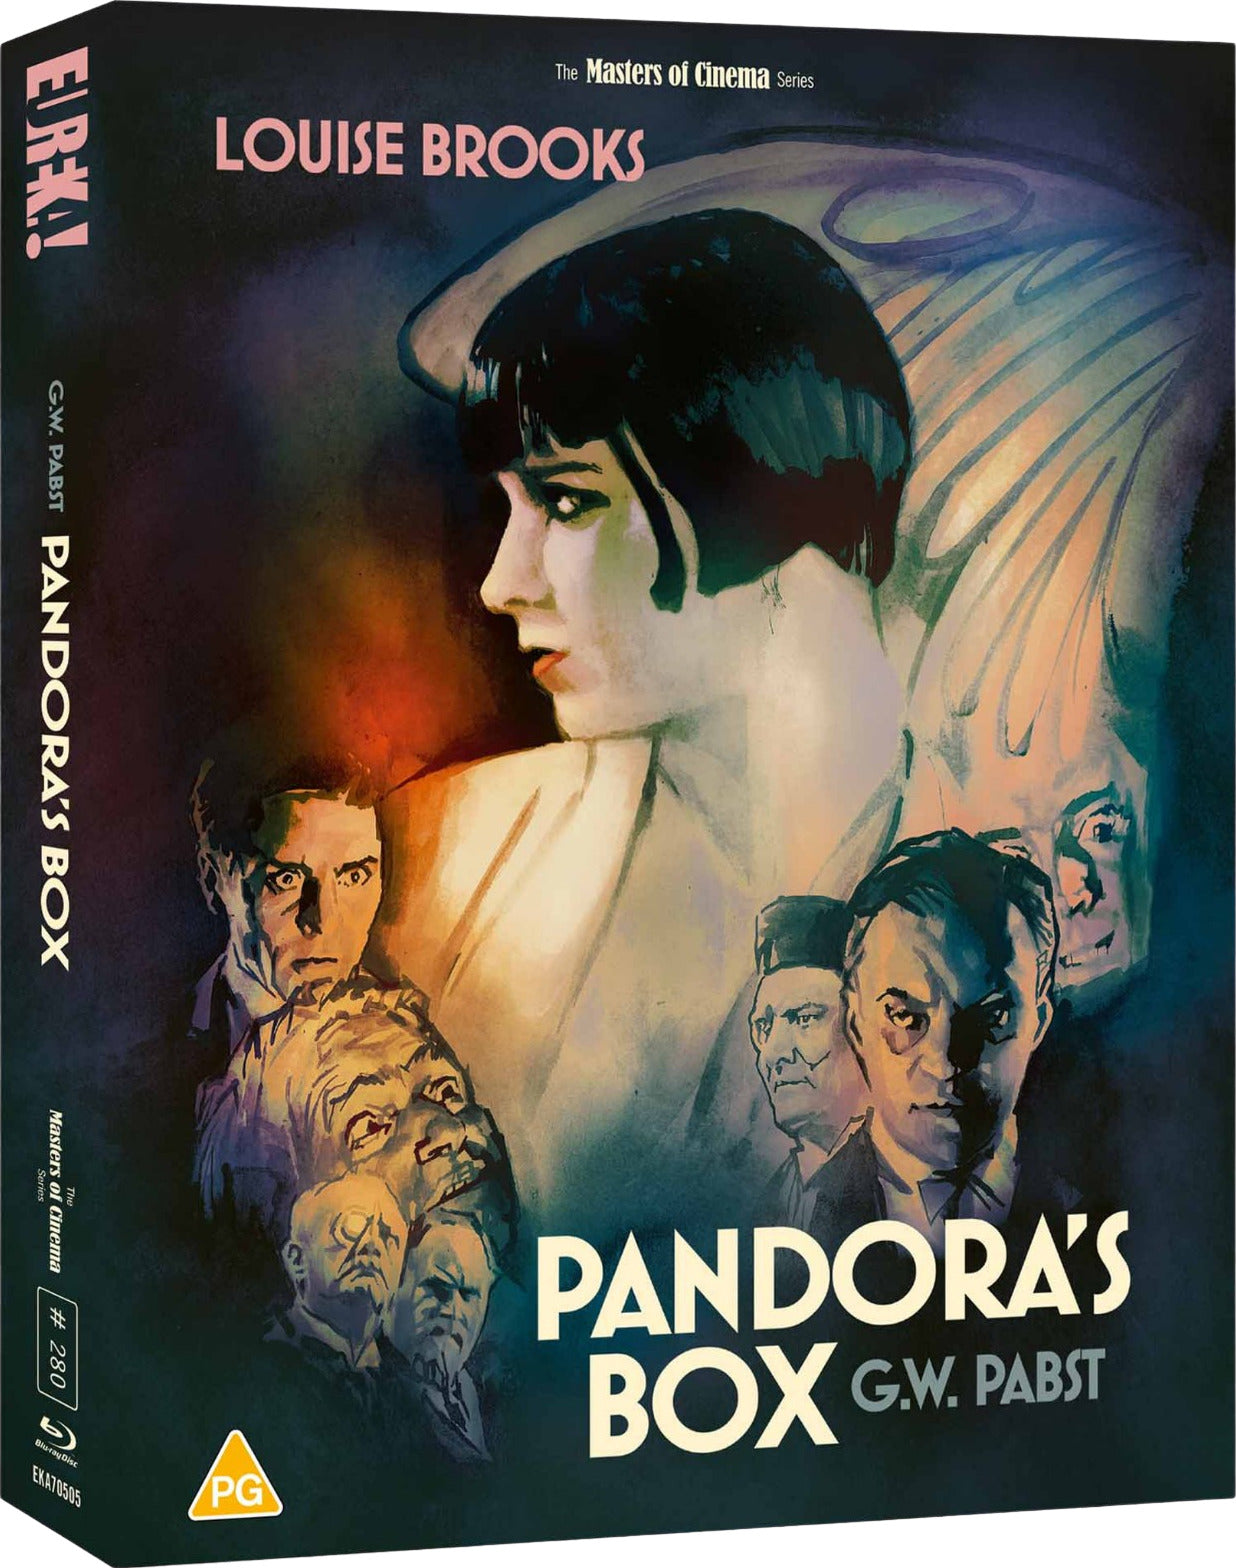 PANDORA'S BOX (REGION B IMPORT - LIMITED EDITION) BLU-RAY